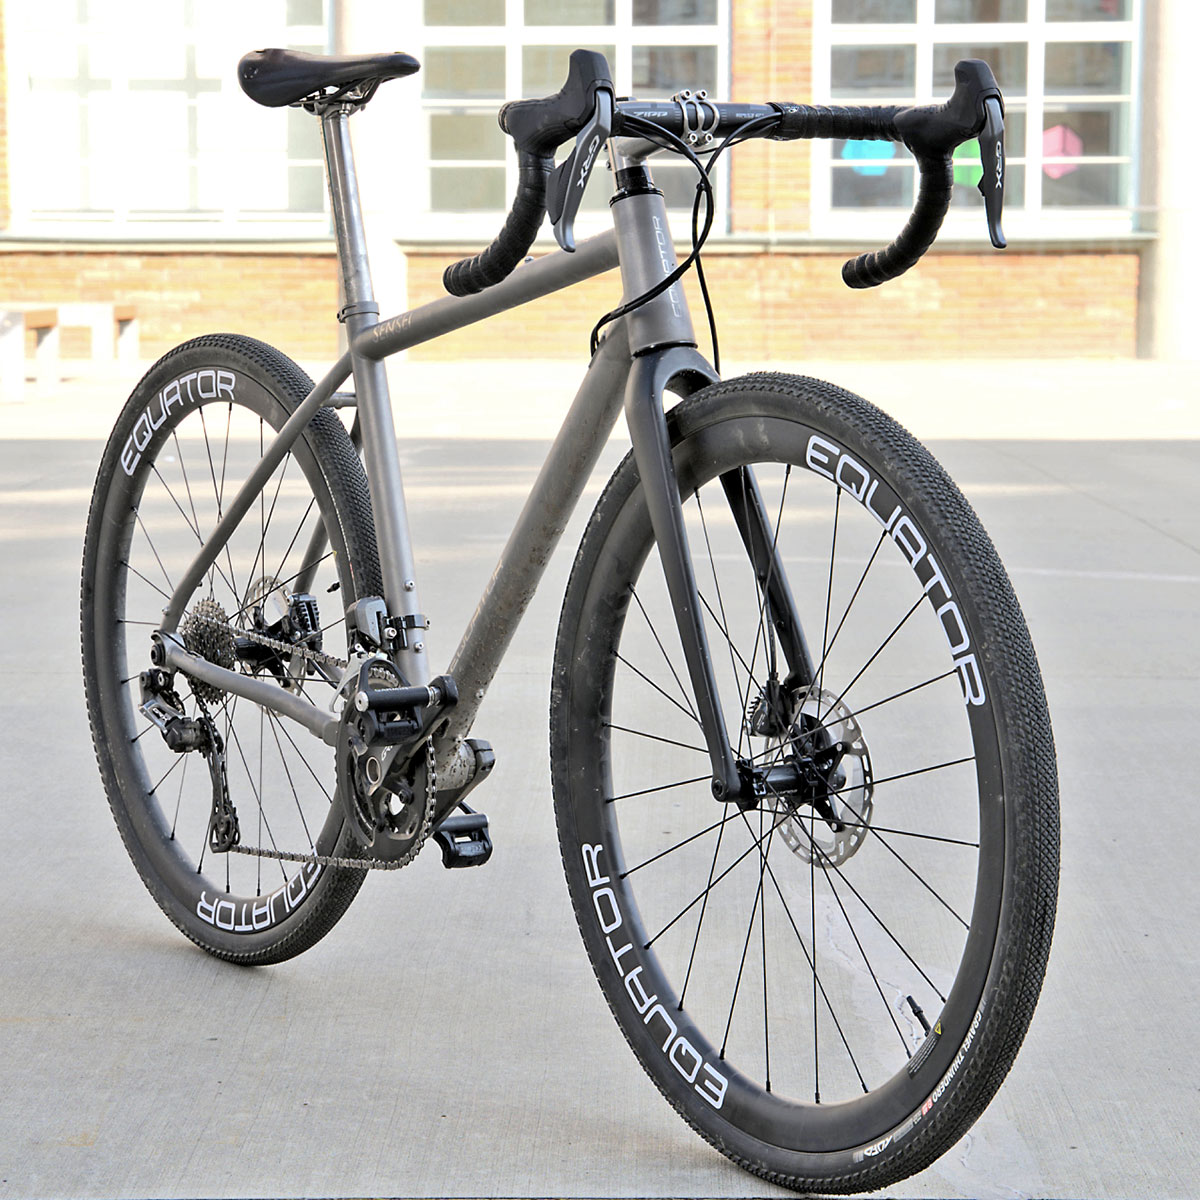 Equator's new affordable consumer-direct titanium gravel bikes, Sensei